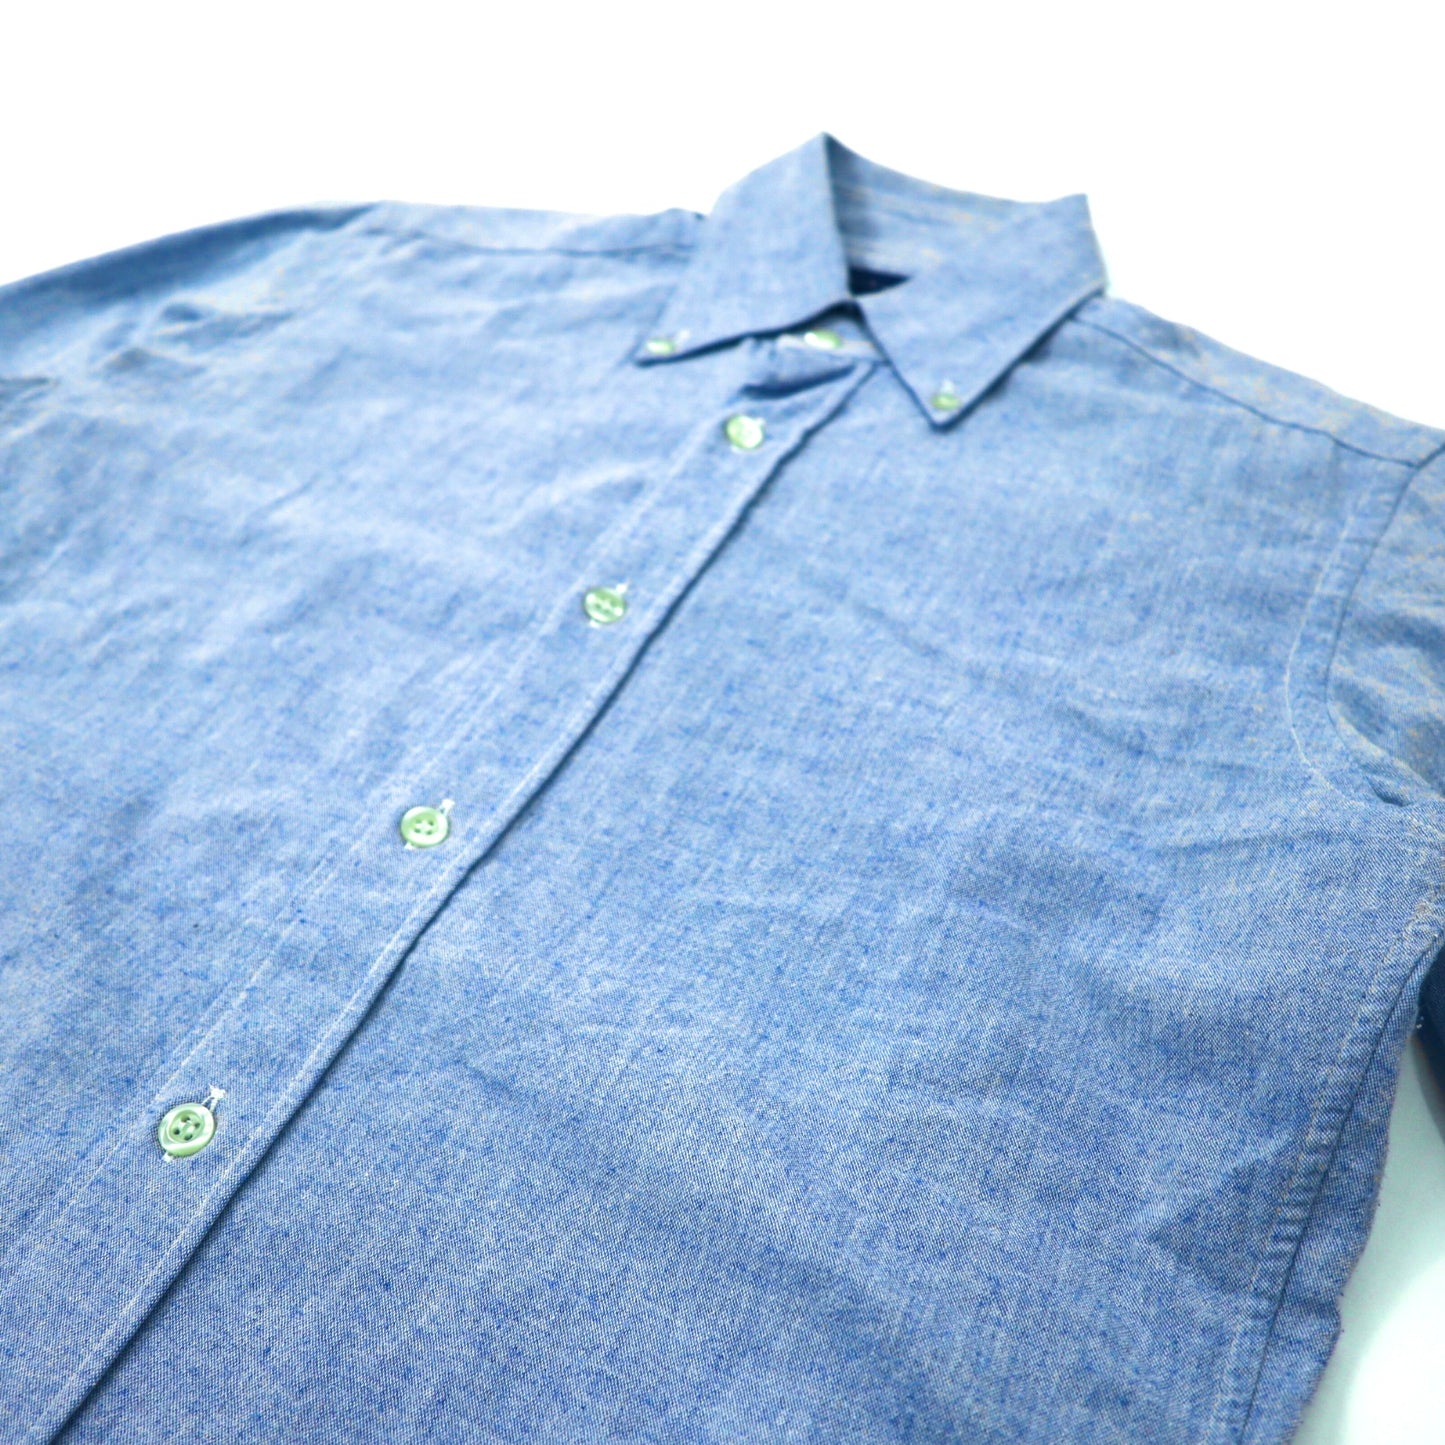 DANOLIS per BEAMS ボタンダウンシャツ XS ブルー SLIM FIT イタリア製